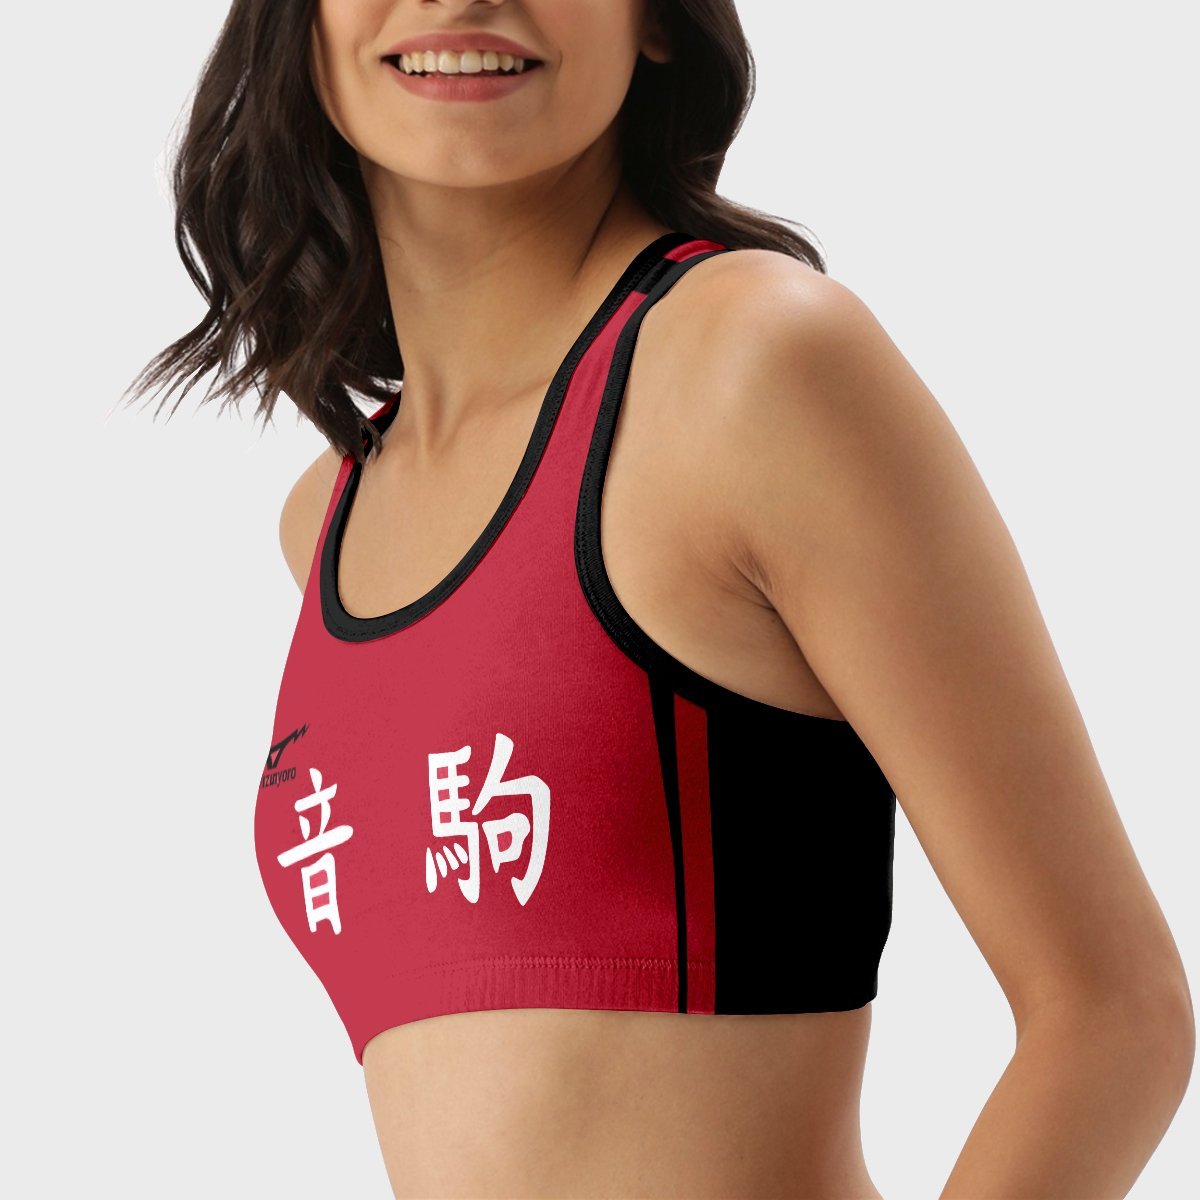 team nekoma active wear set 785400 - Anime Swimsuits